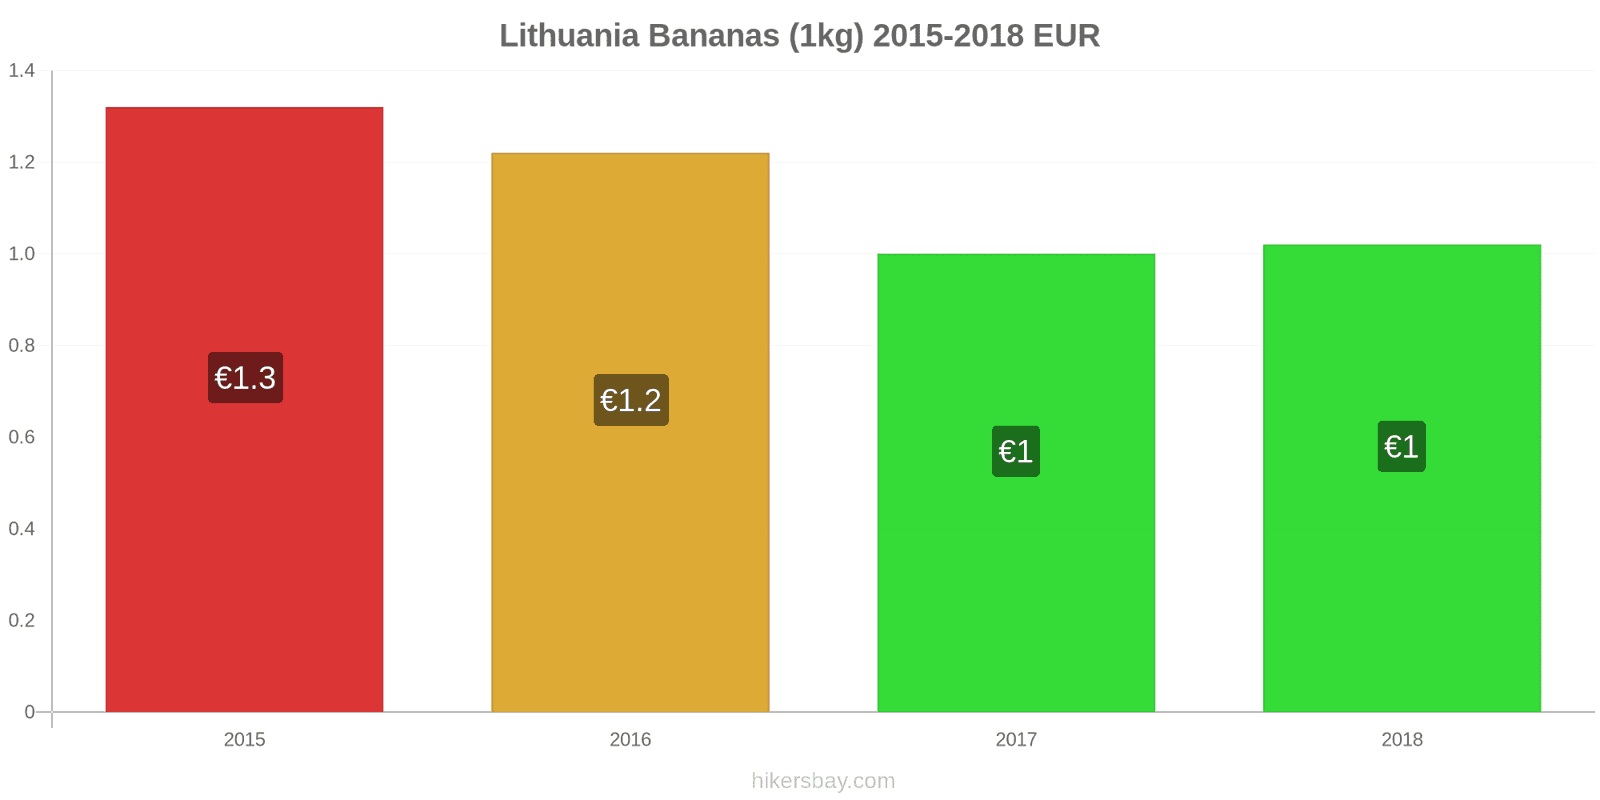 Lithuania price changes Bananas (1kg) hikersbay.com